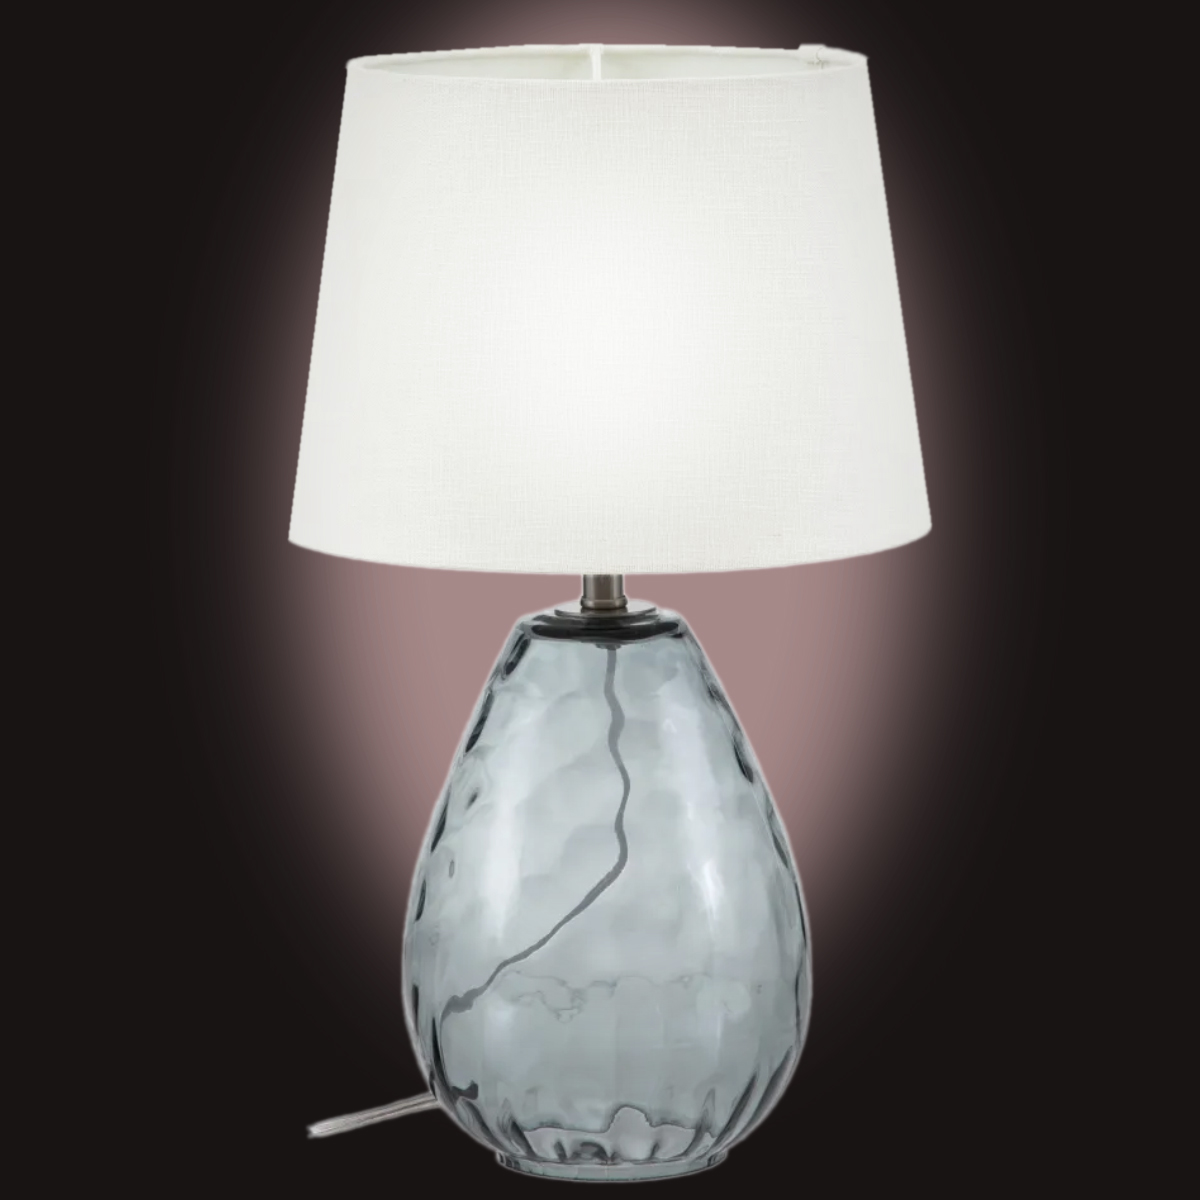 Lampe en verre gris 41 cm